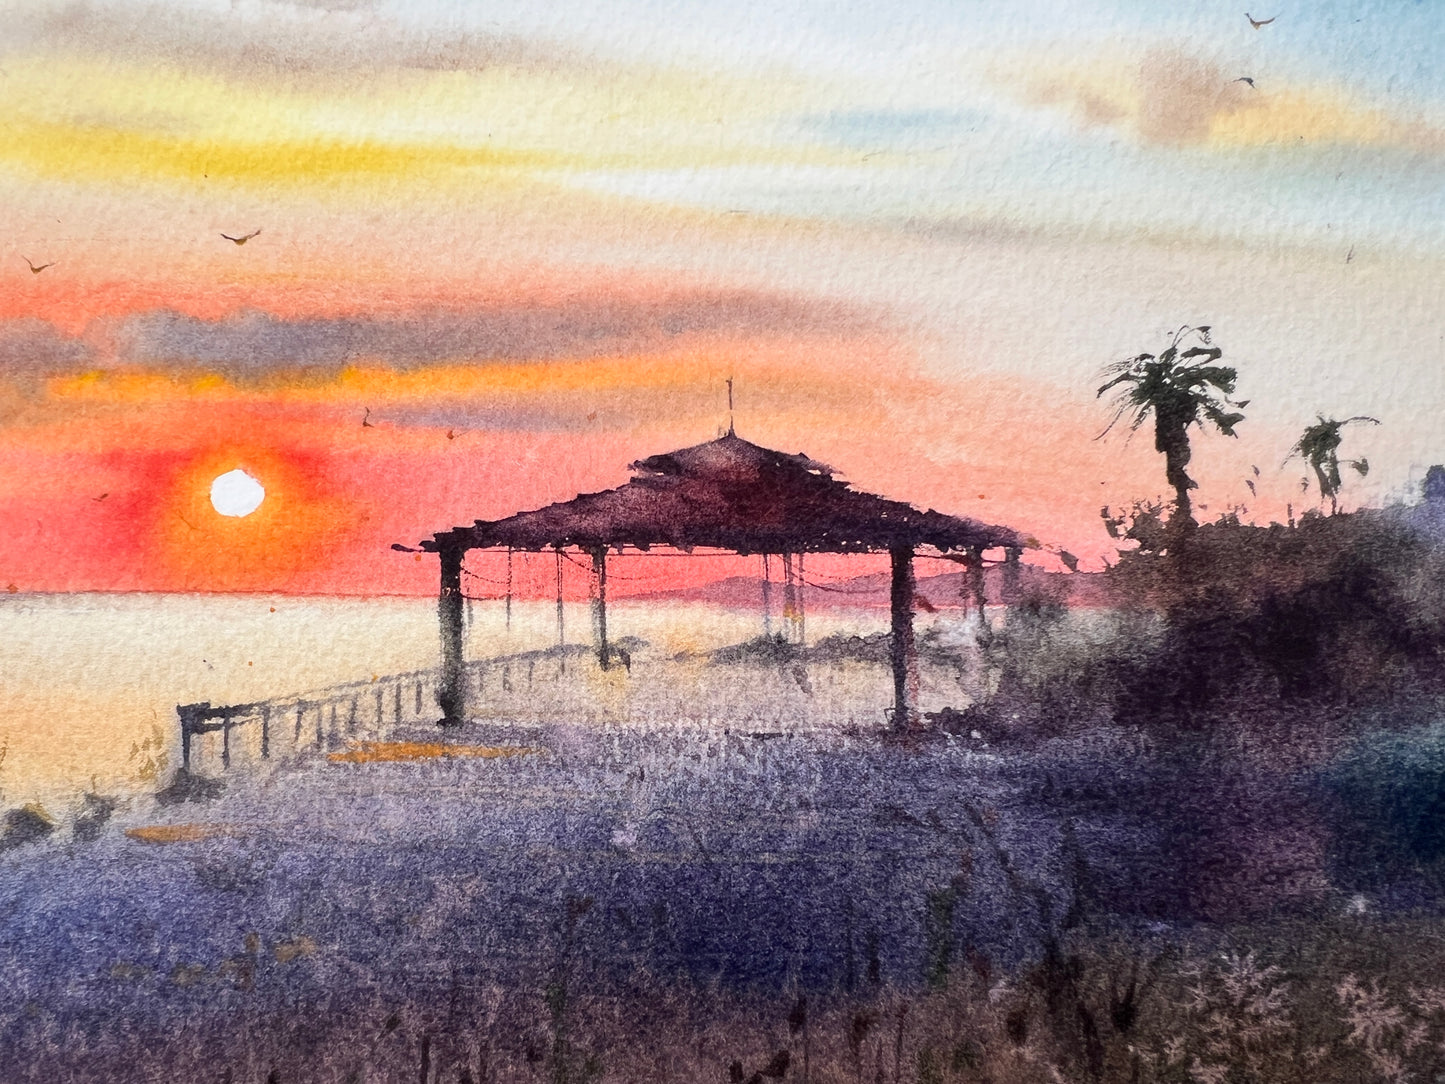 Palm Beach Painting, Watercolor Original Artwork, Hawaii Sunset, California Beach Art, Coastal Seascape